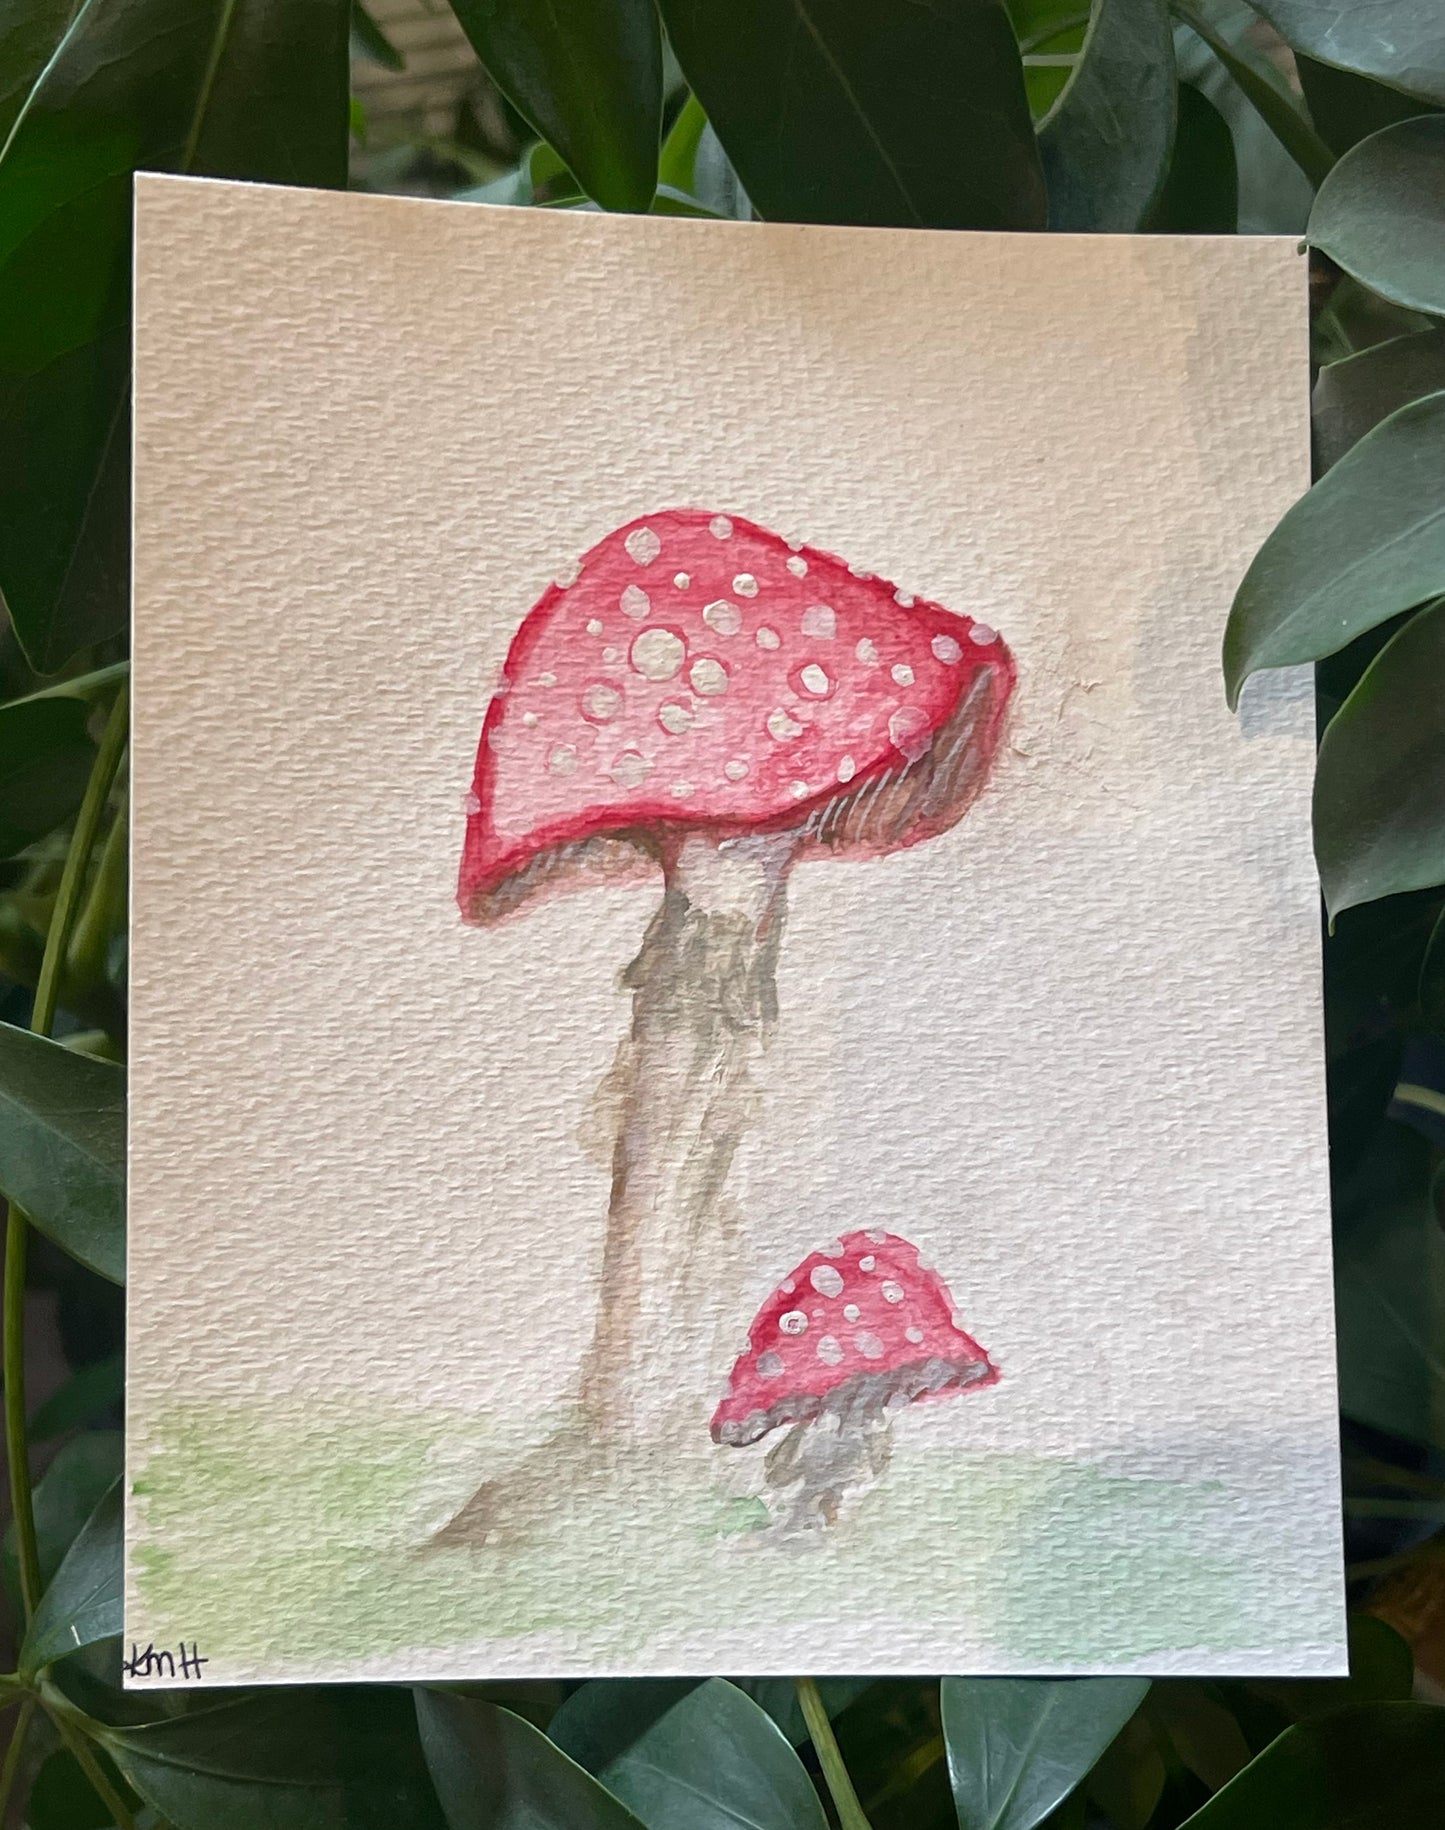 Keely Krueger- Original Watercolors- Mushrooms